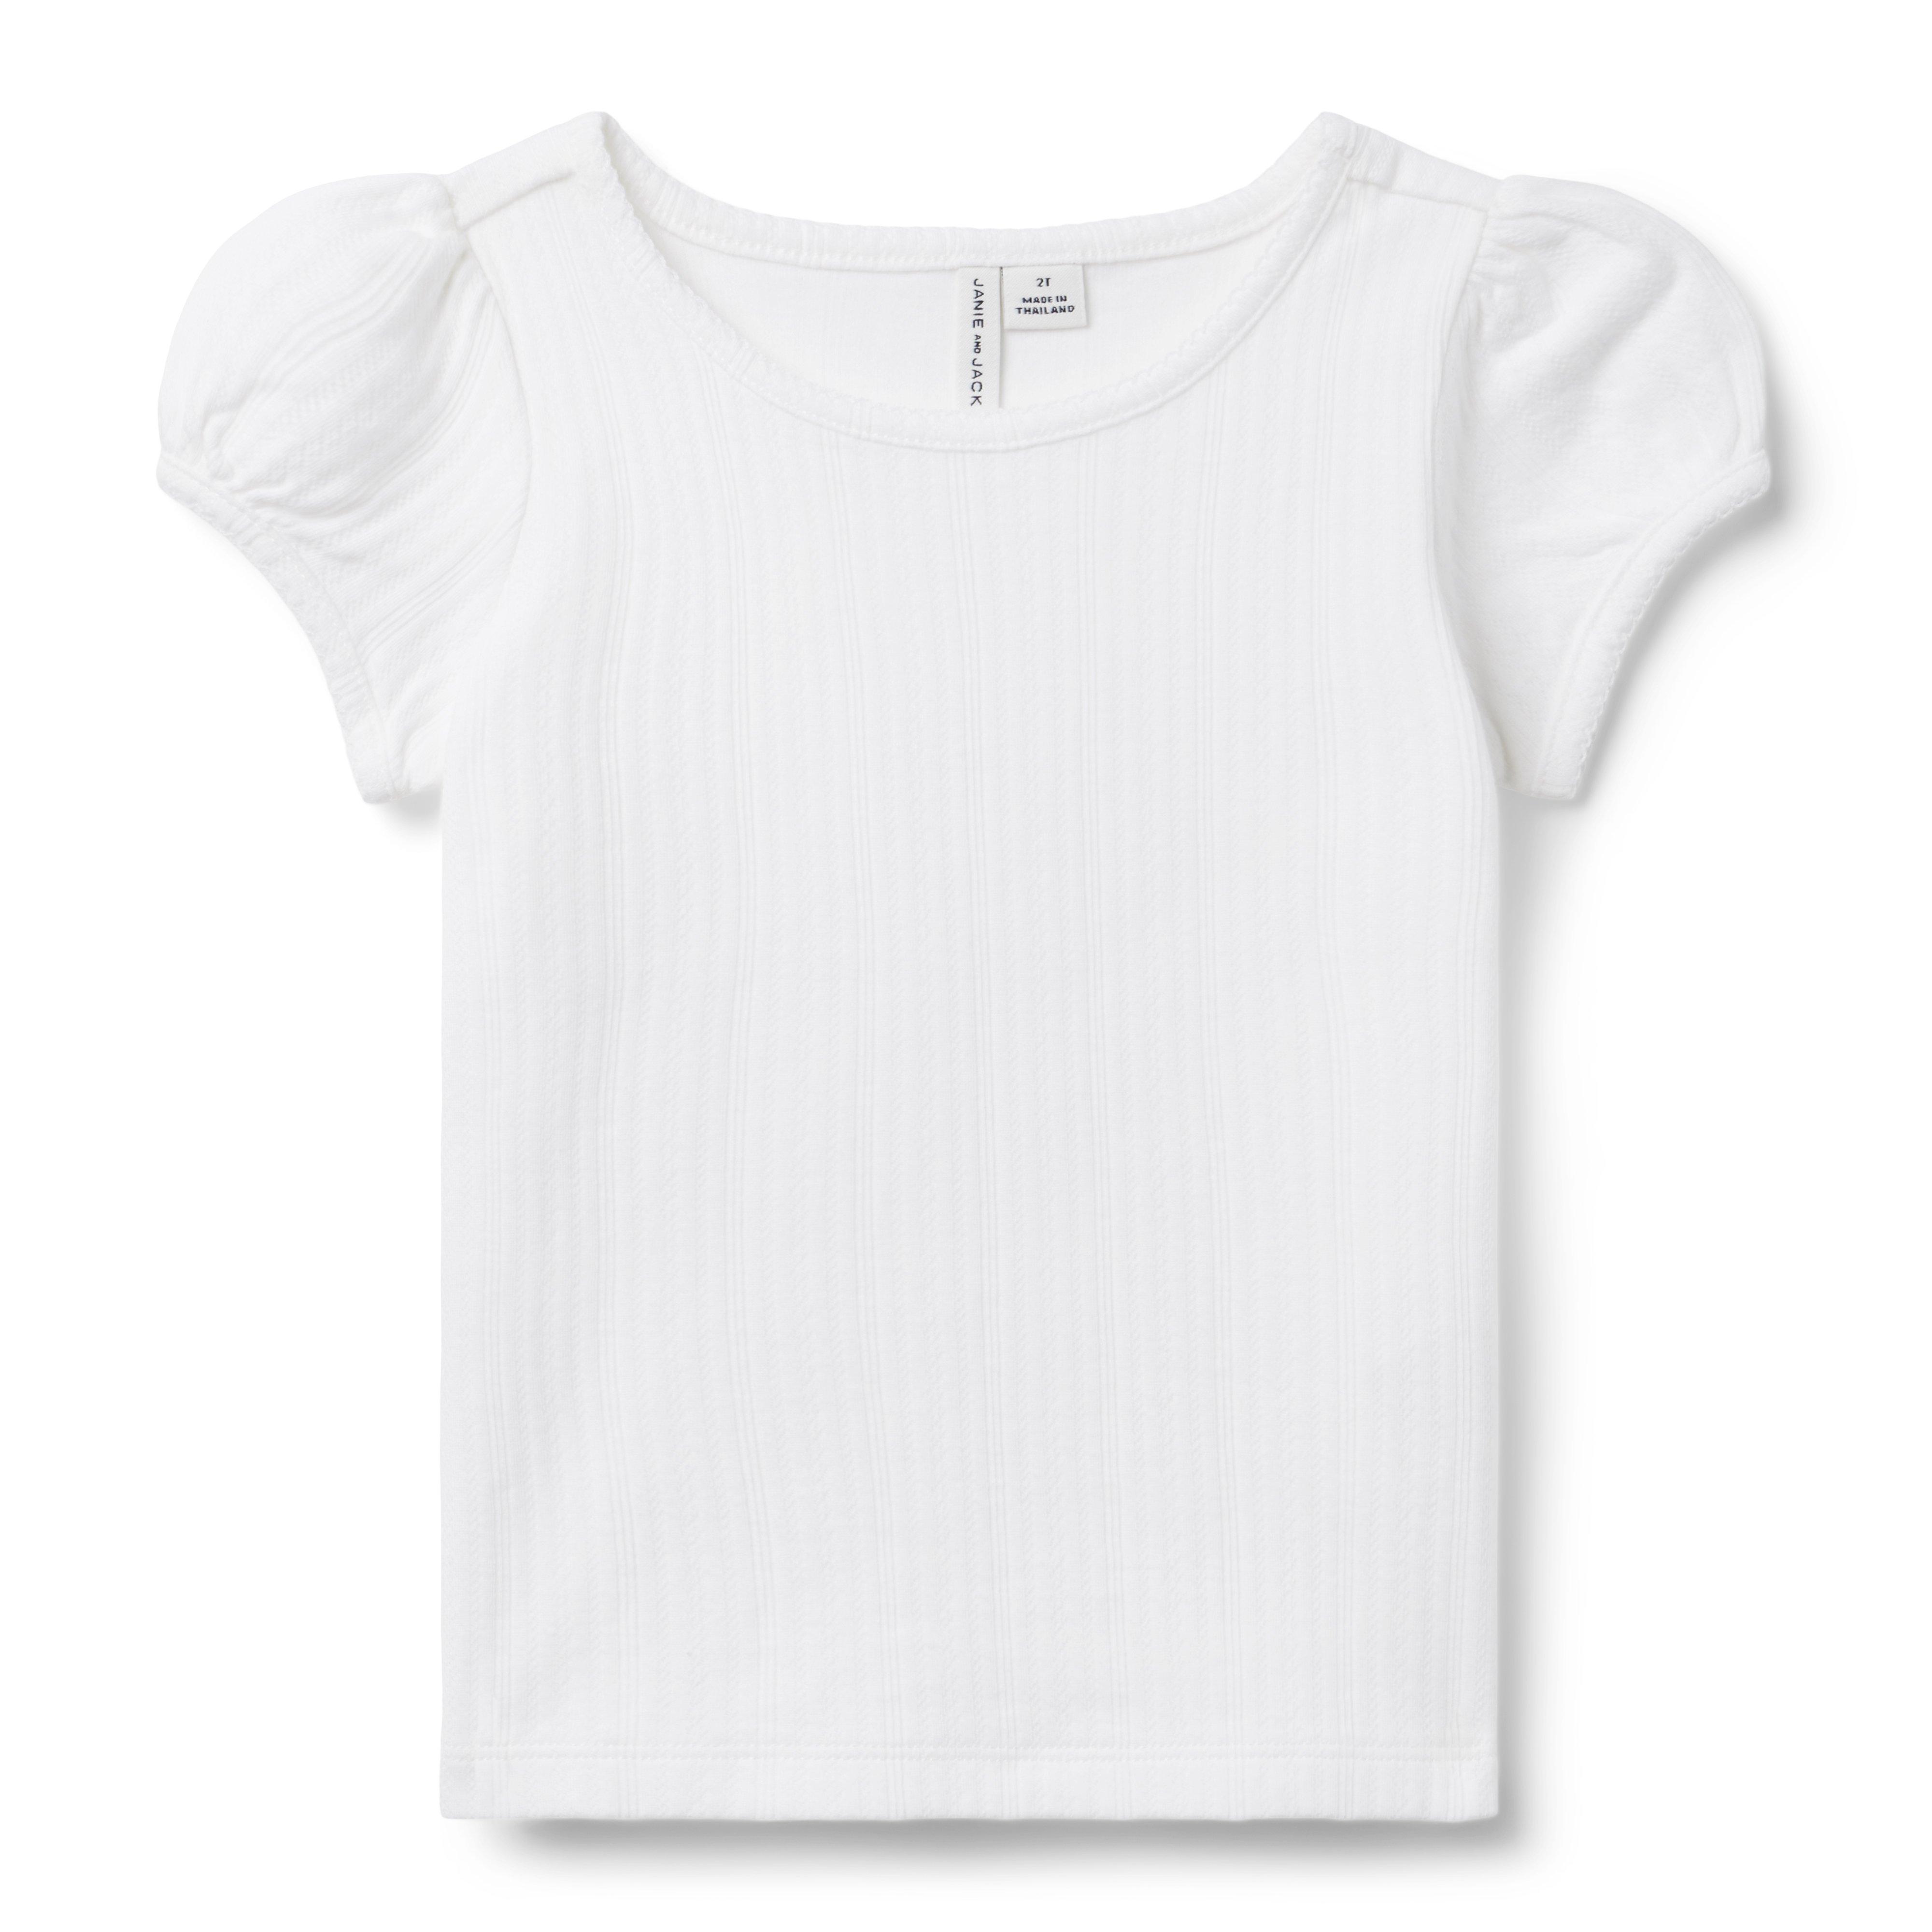 Jack & Jill Girls Undershirts - Cami Tank Top - White Tank Top - 100%  Cotton - 3 Pack (Size 10)